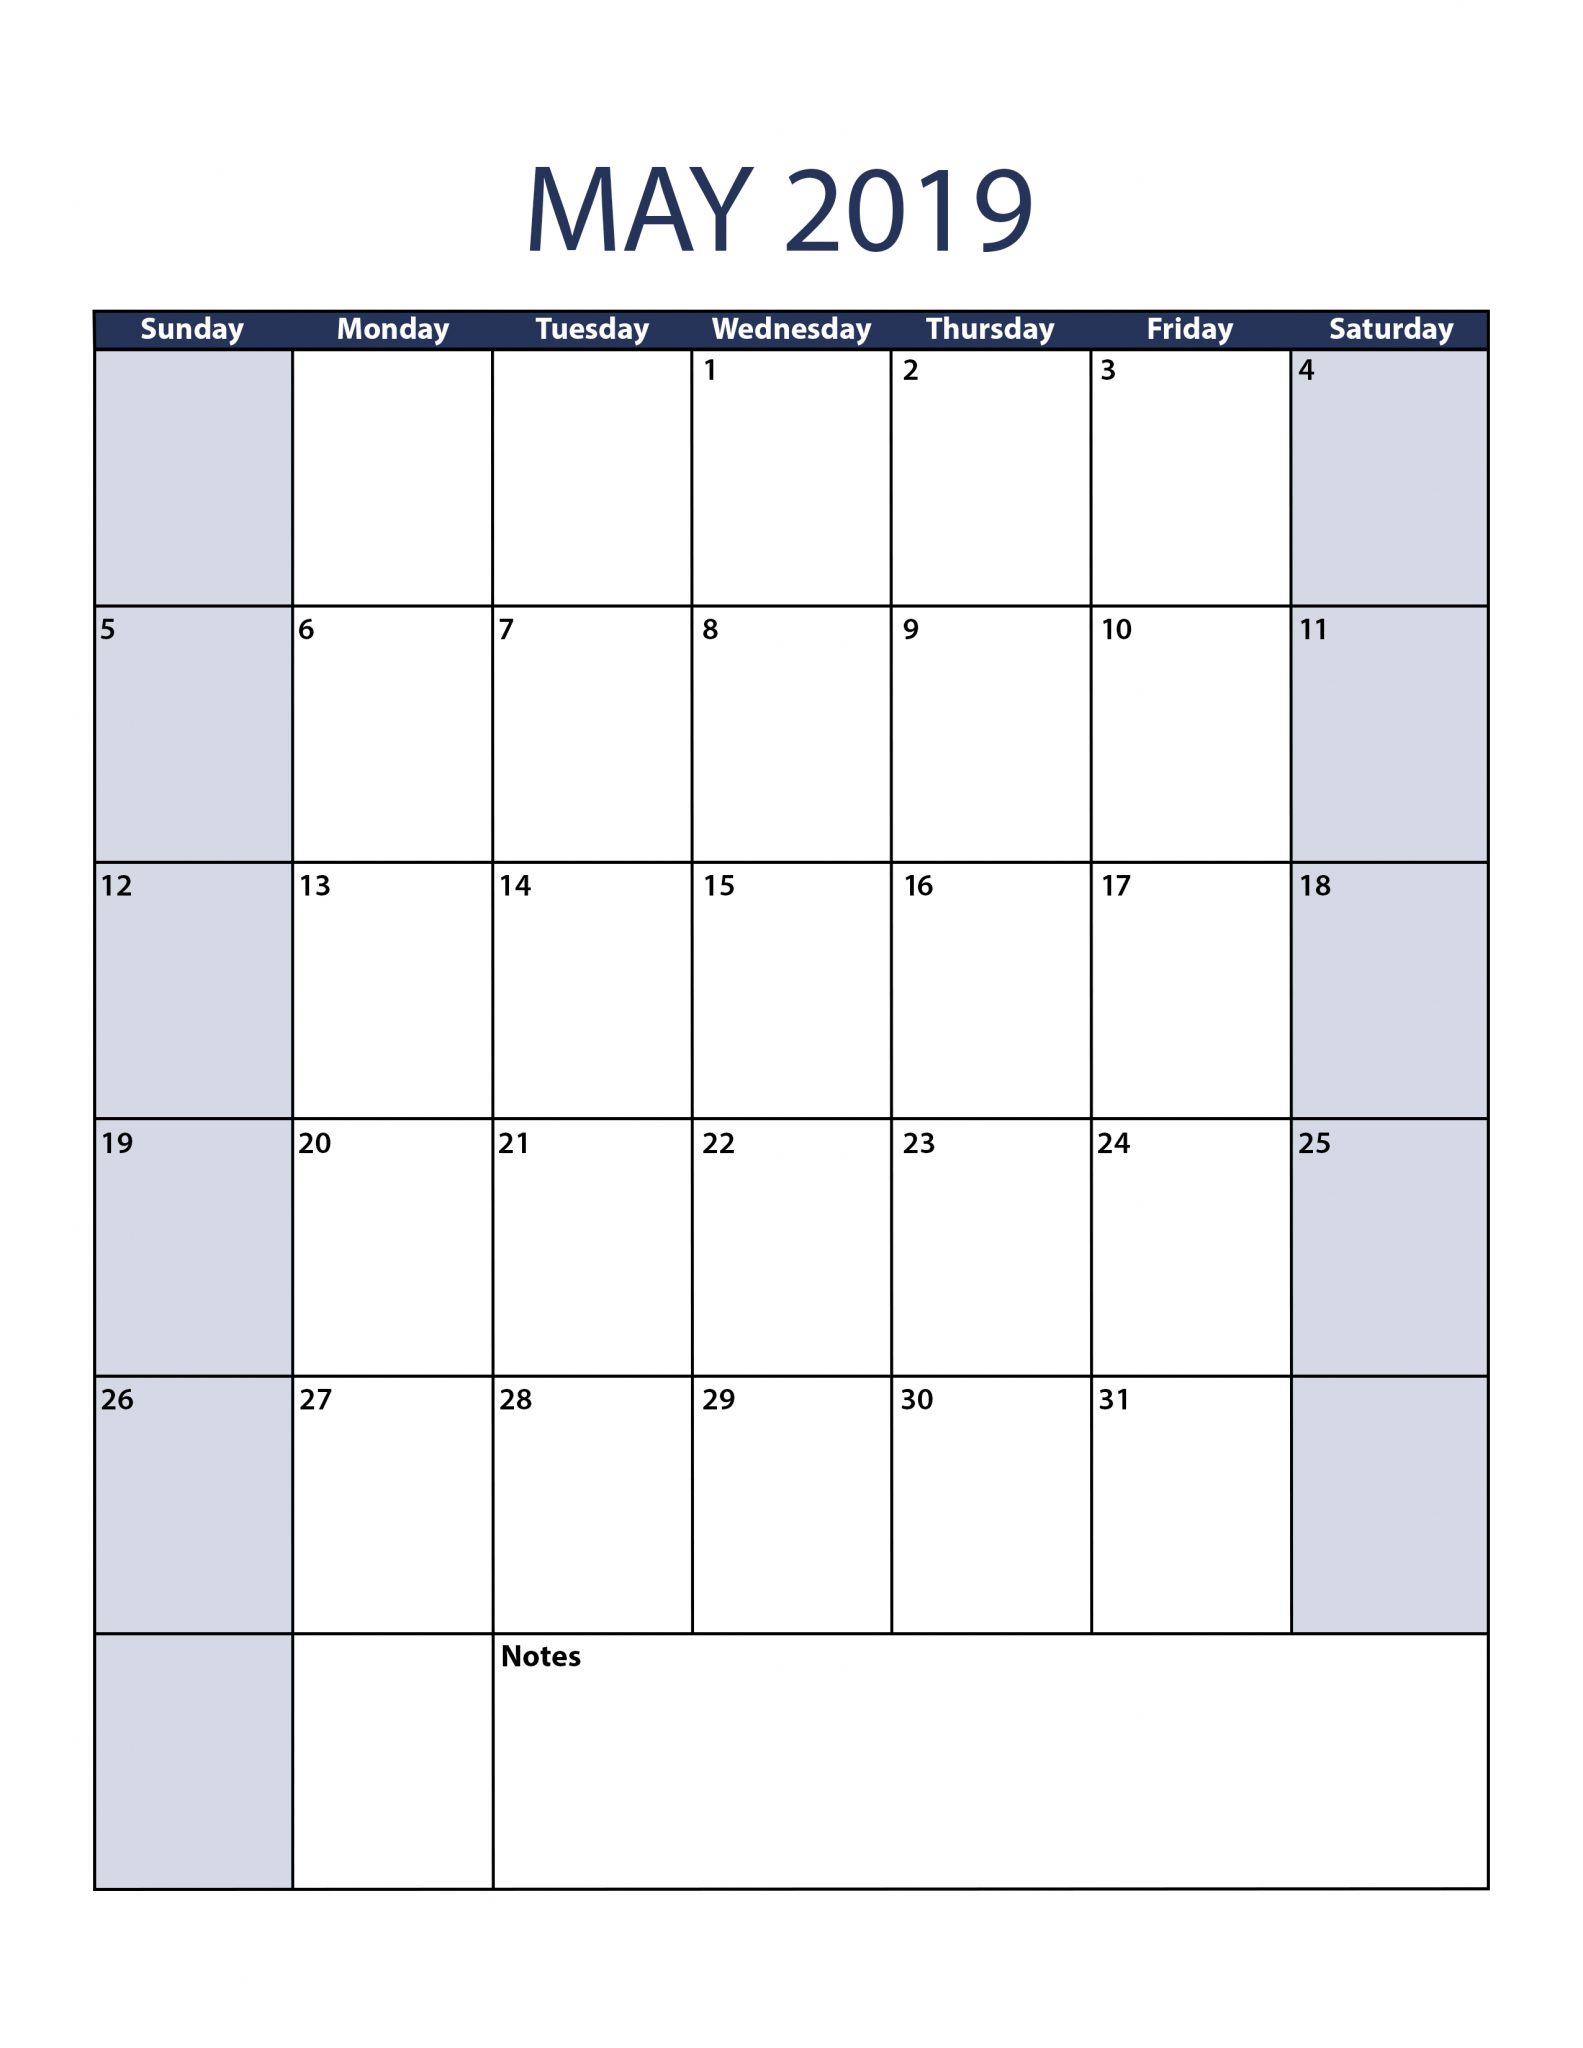 May 2019 Portrait Calendar to Print